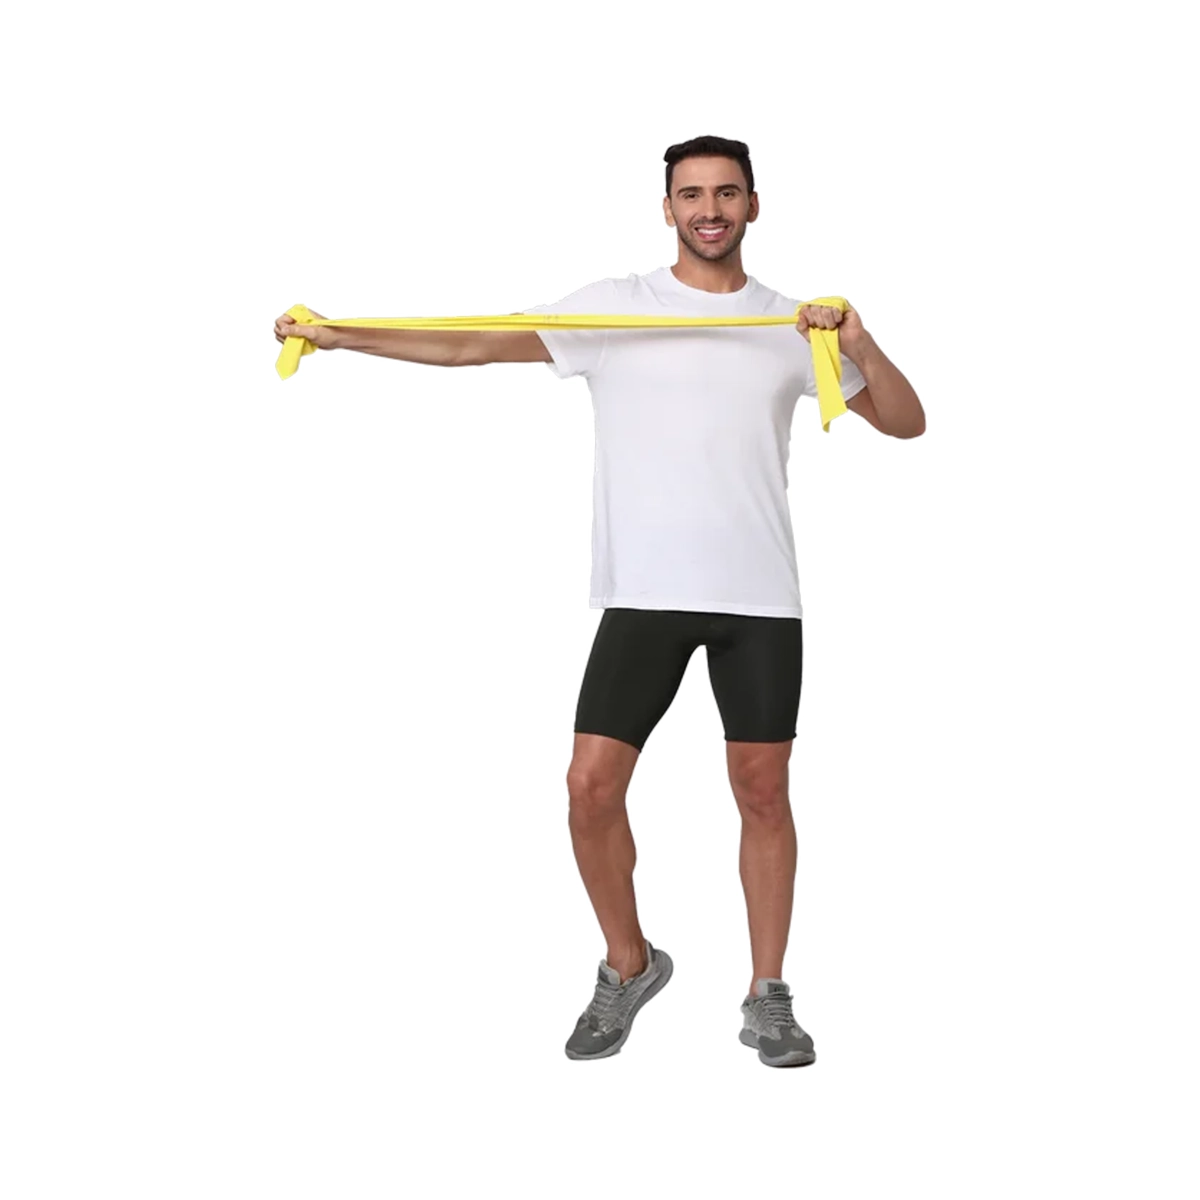 First product image of Flamingo Premium Exercise Band Yellow OC 2384